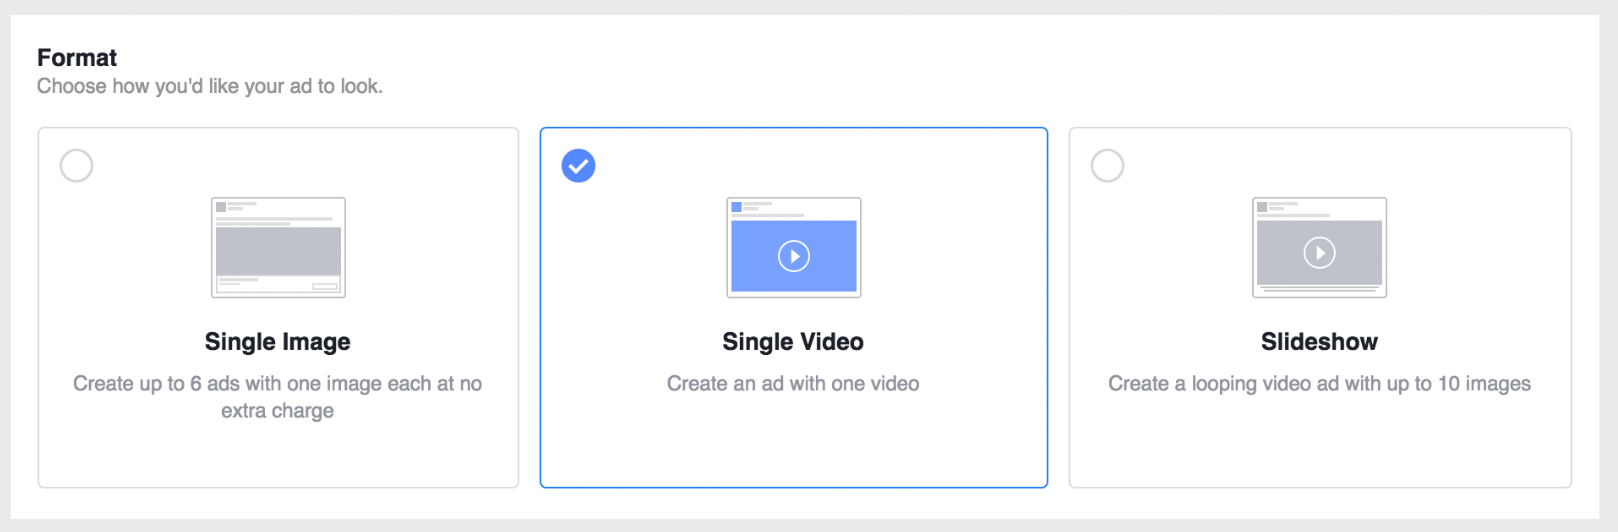 select single video